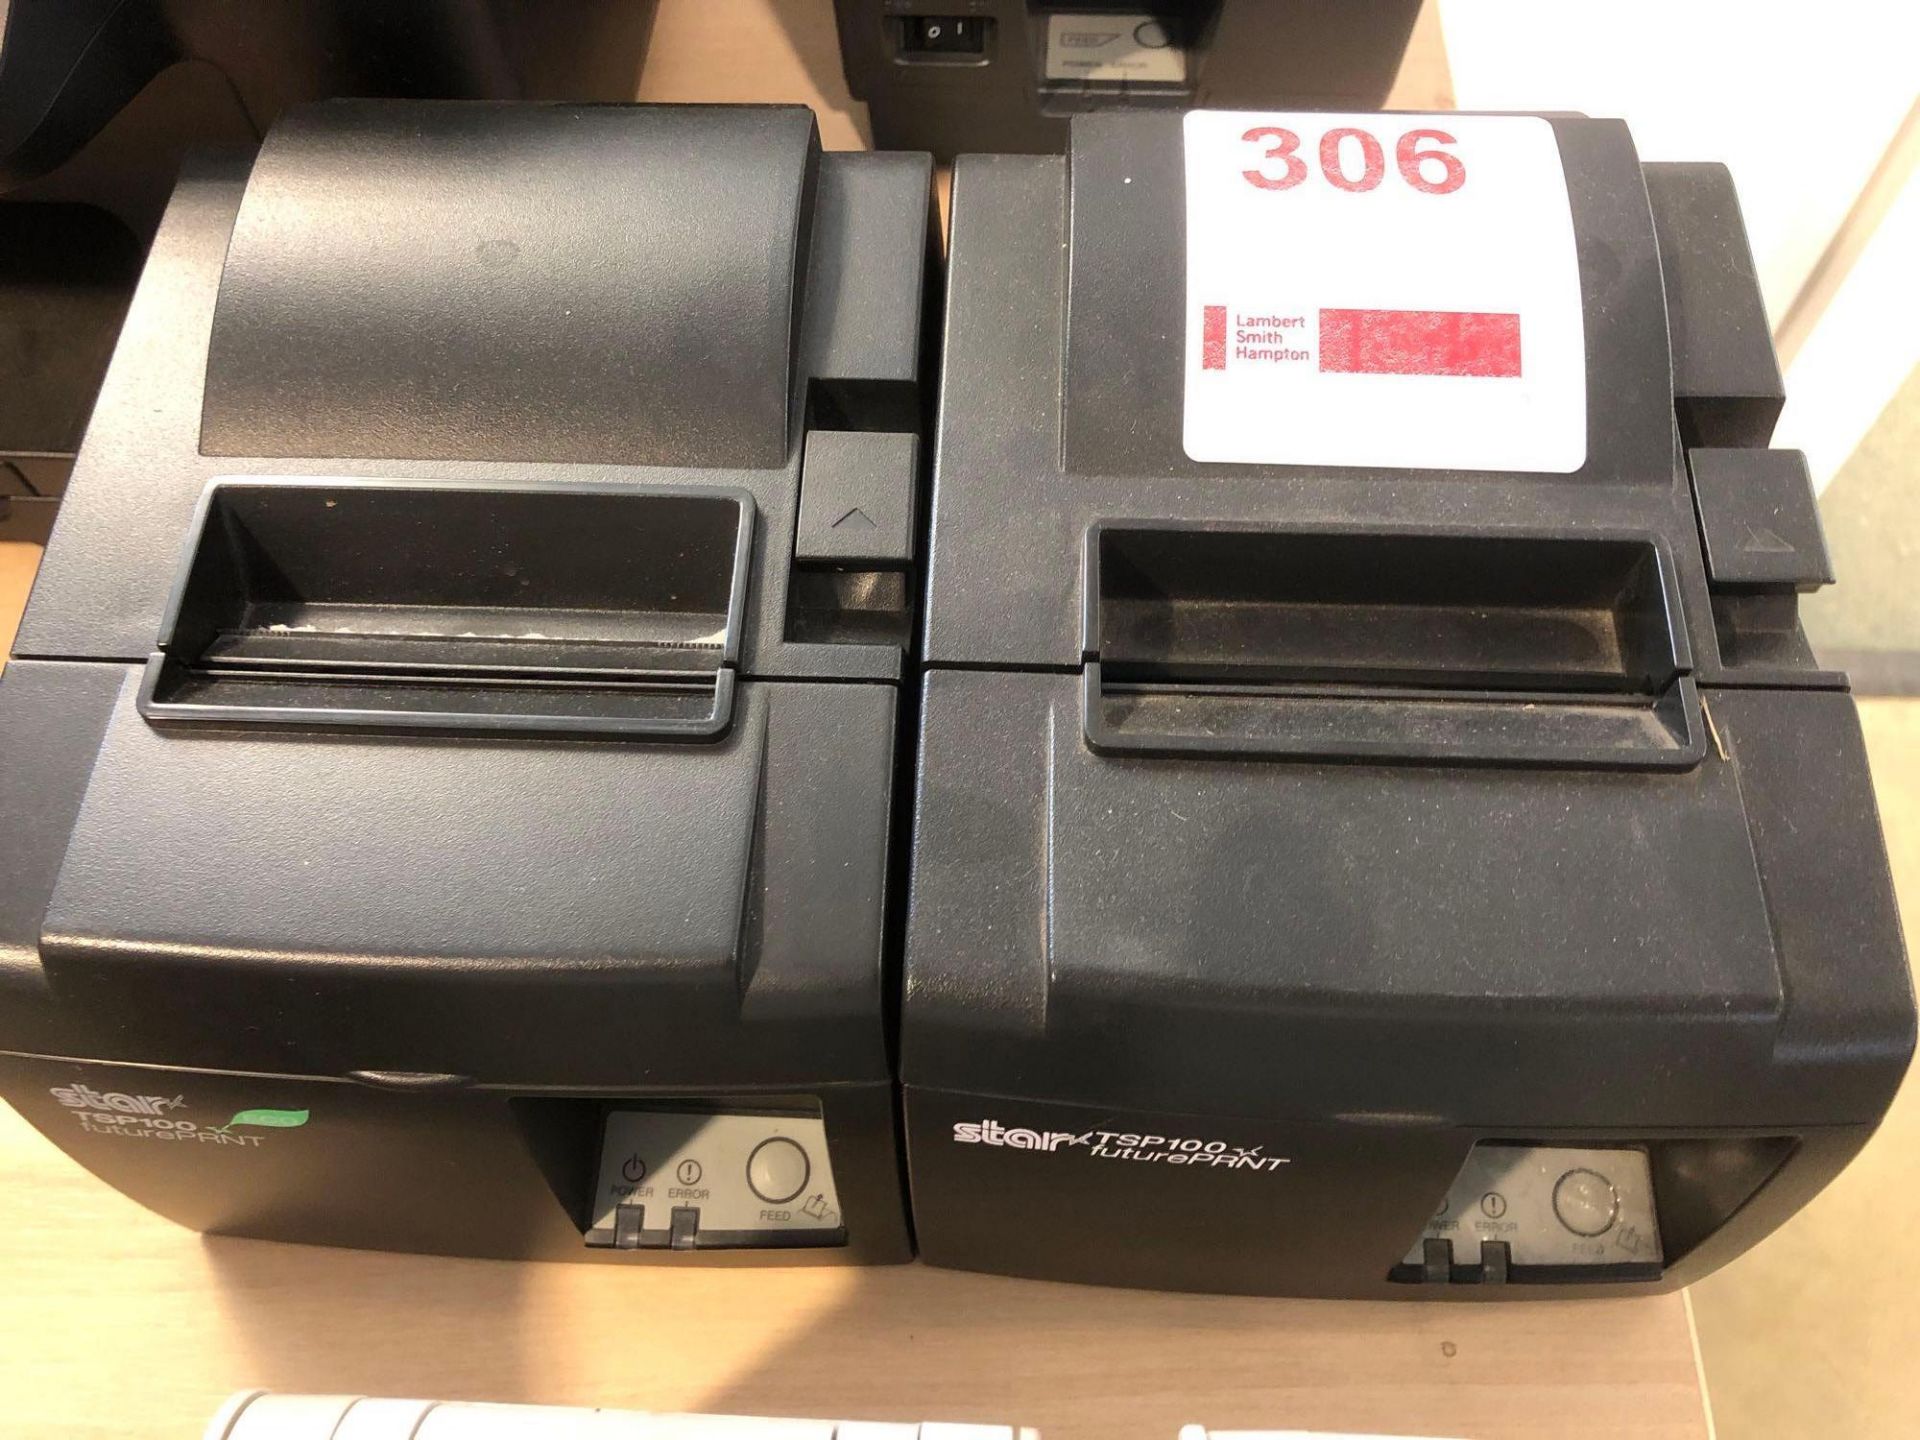 Two Star TSP100 Future Print Thermal Receipt Printers and a Star TSP700 II Thermal Receipt